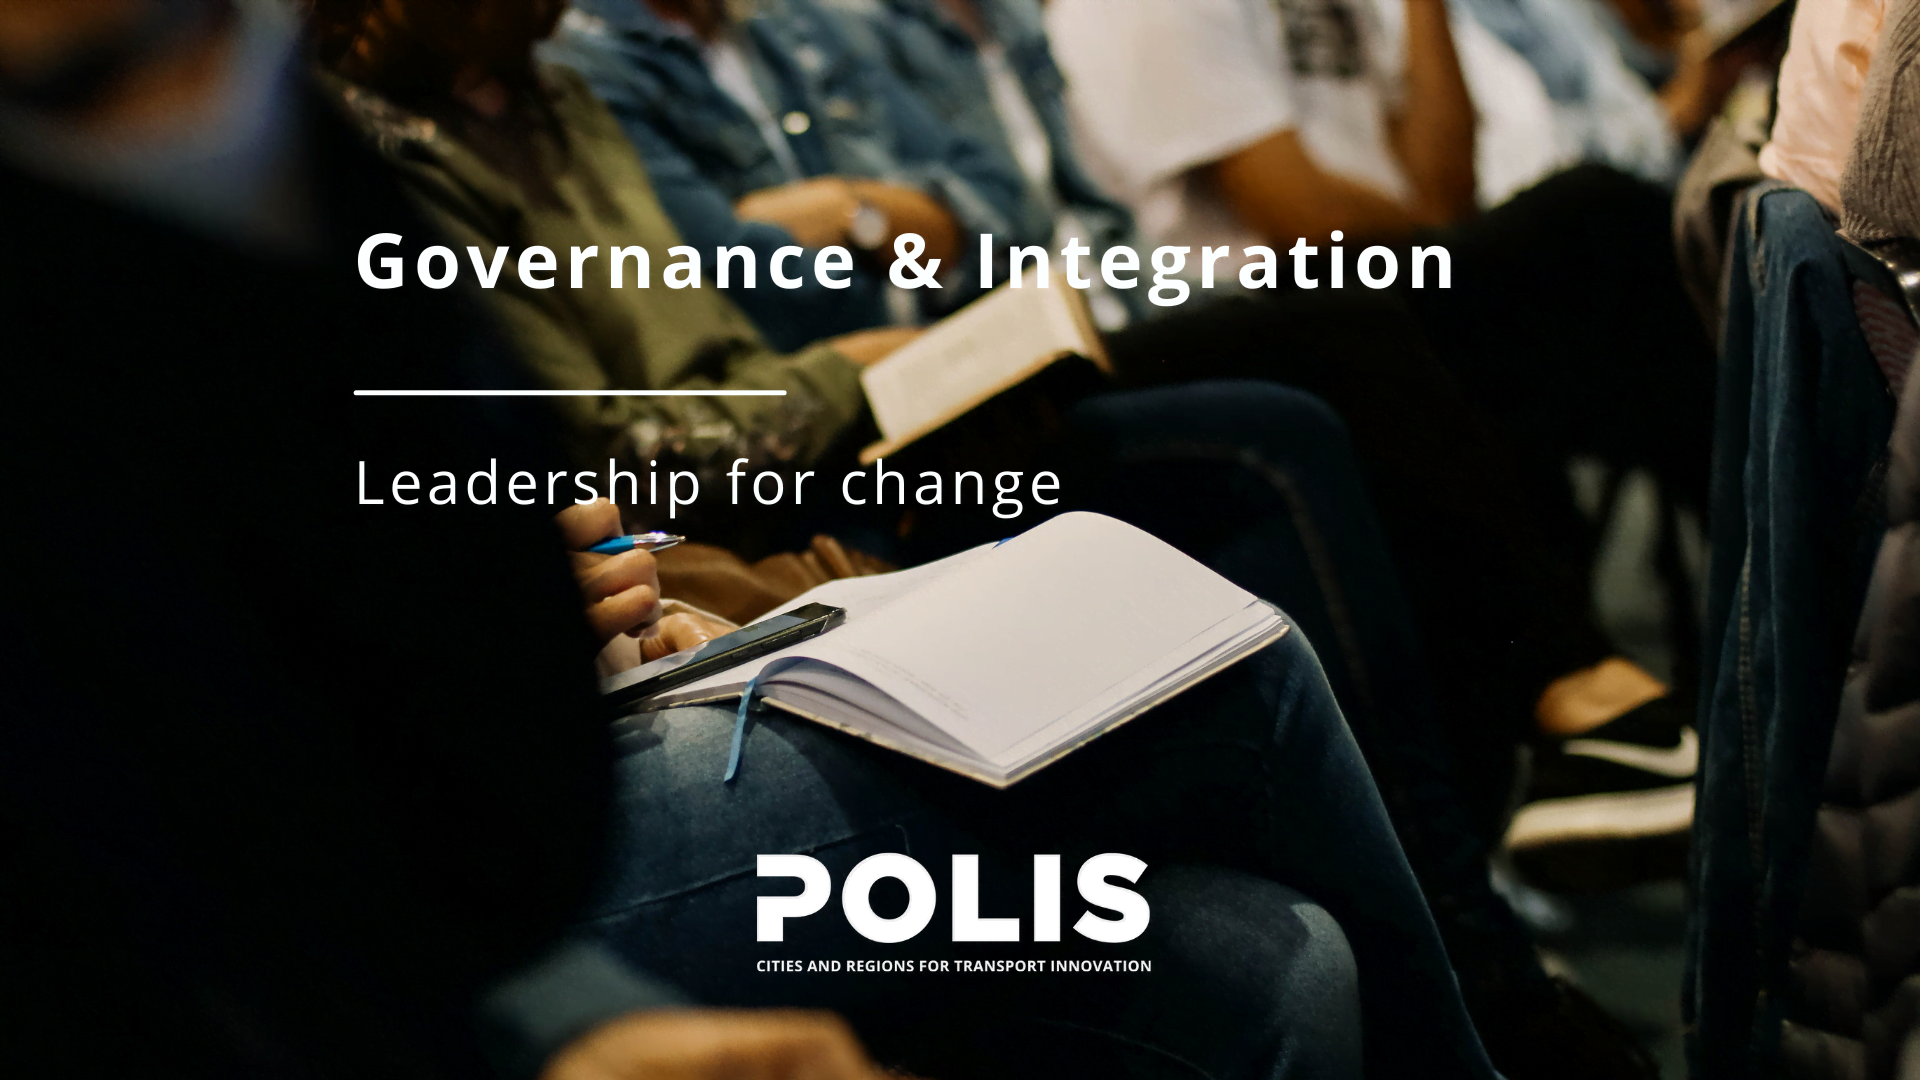 Governance & Integration working group meeting: Leadership for change